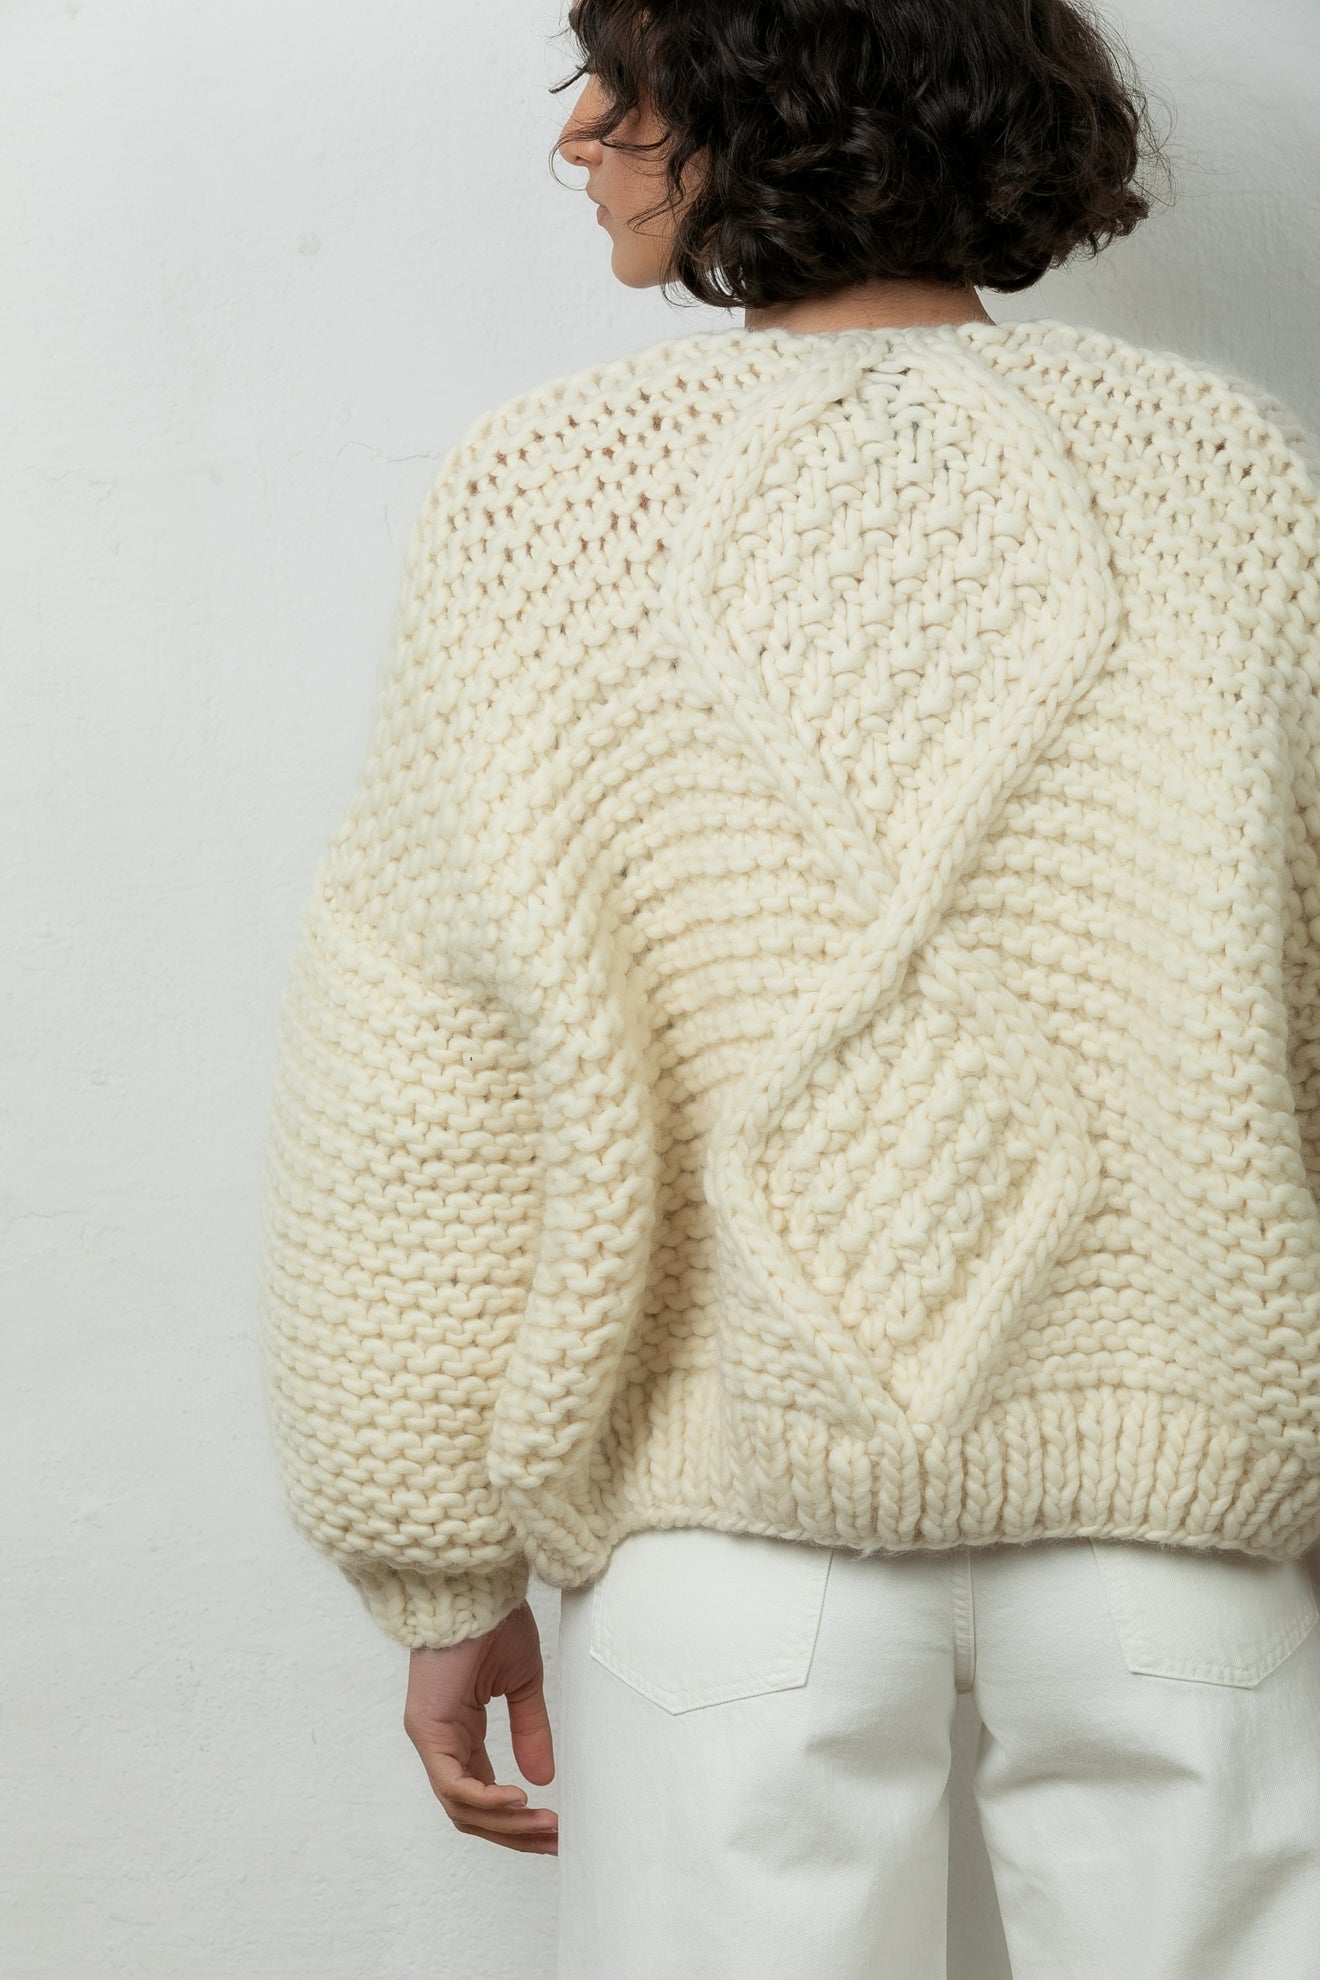 wool bomber chunky knit Mr Mittens winter white cream ivory